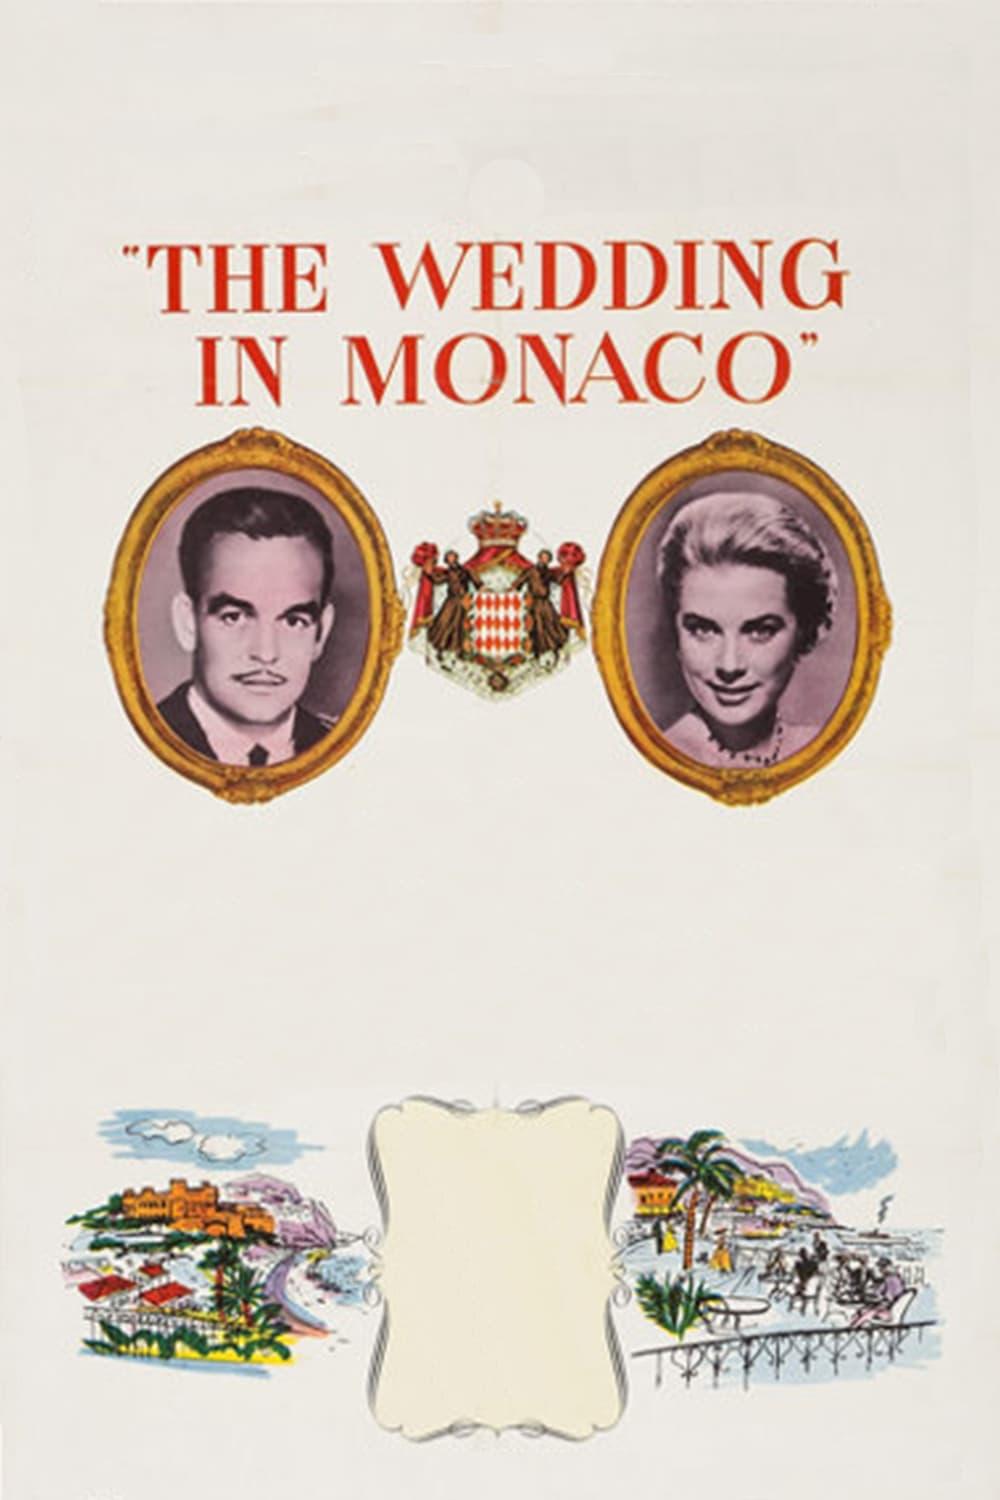 The Wedding in Monaco poster